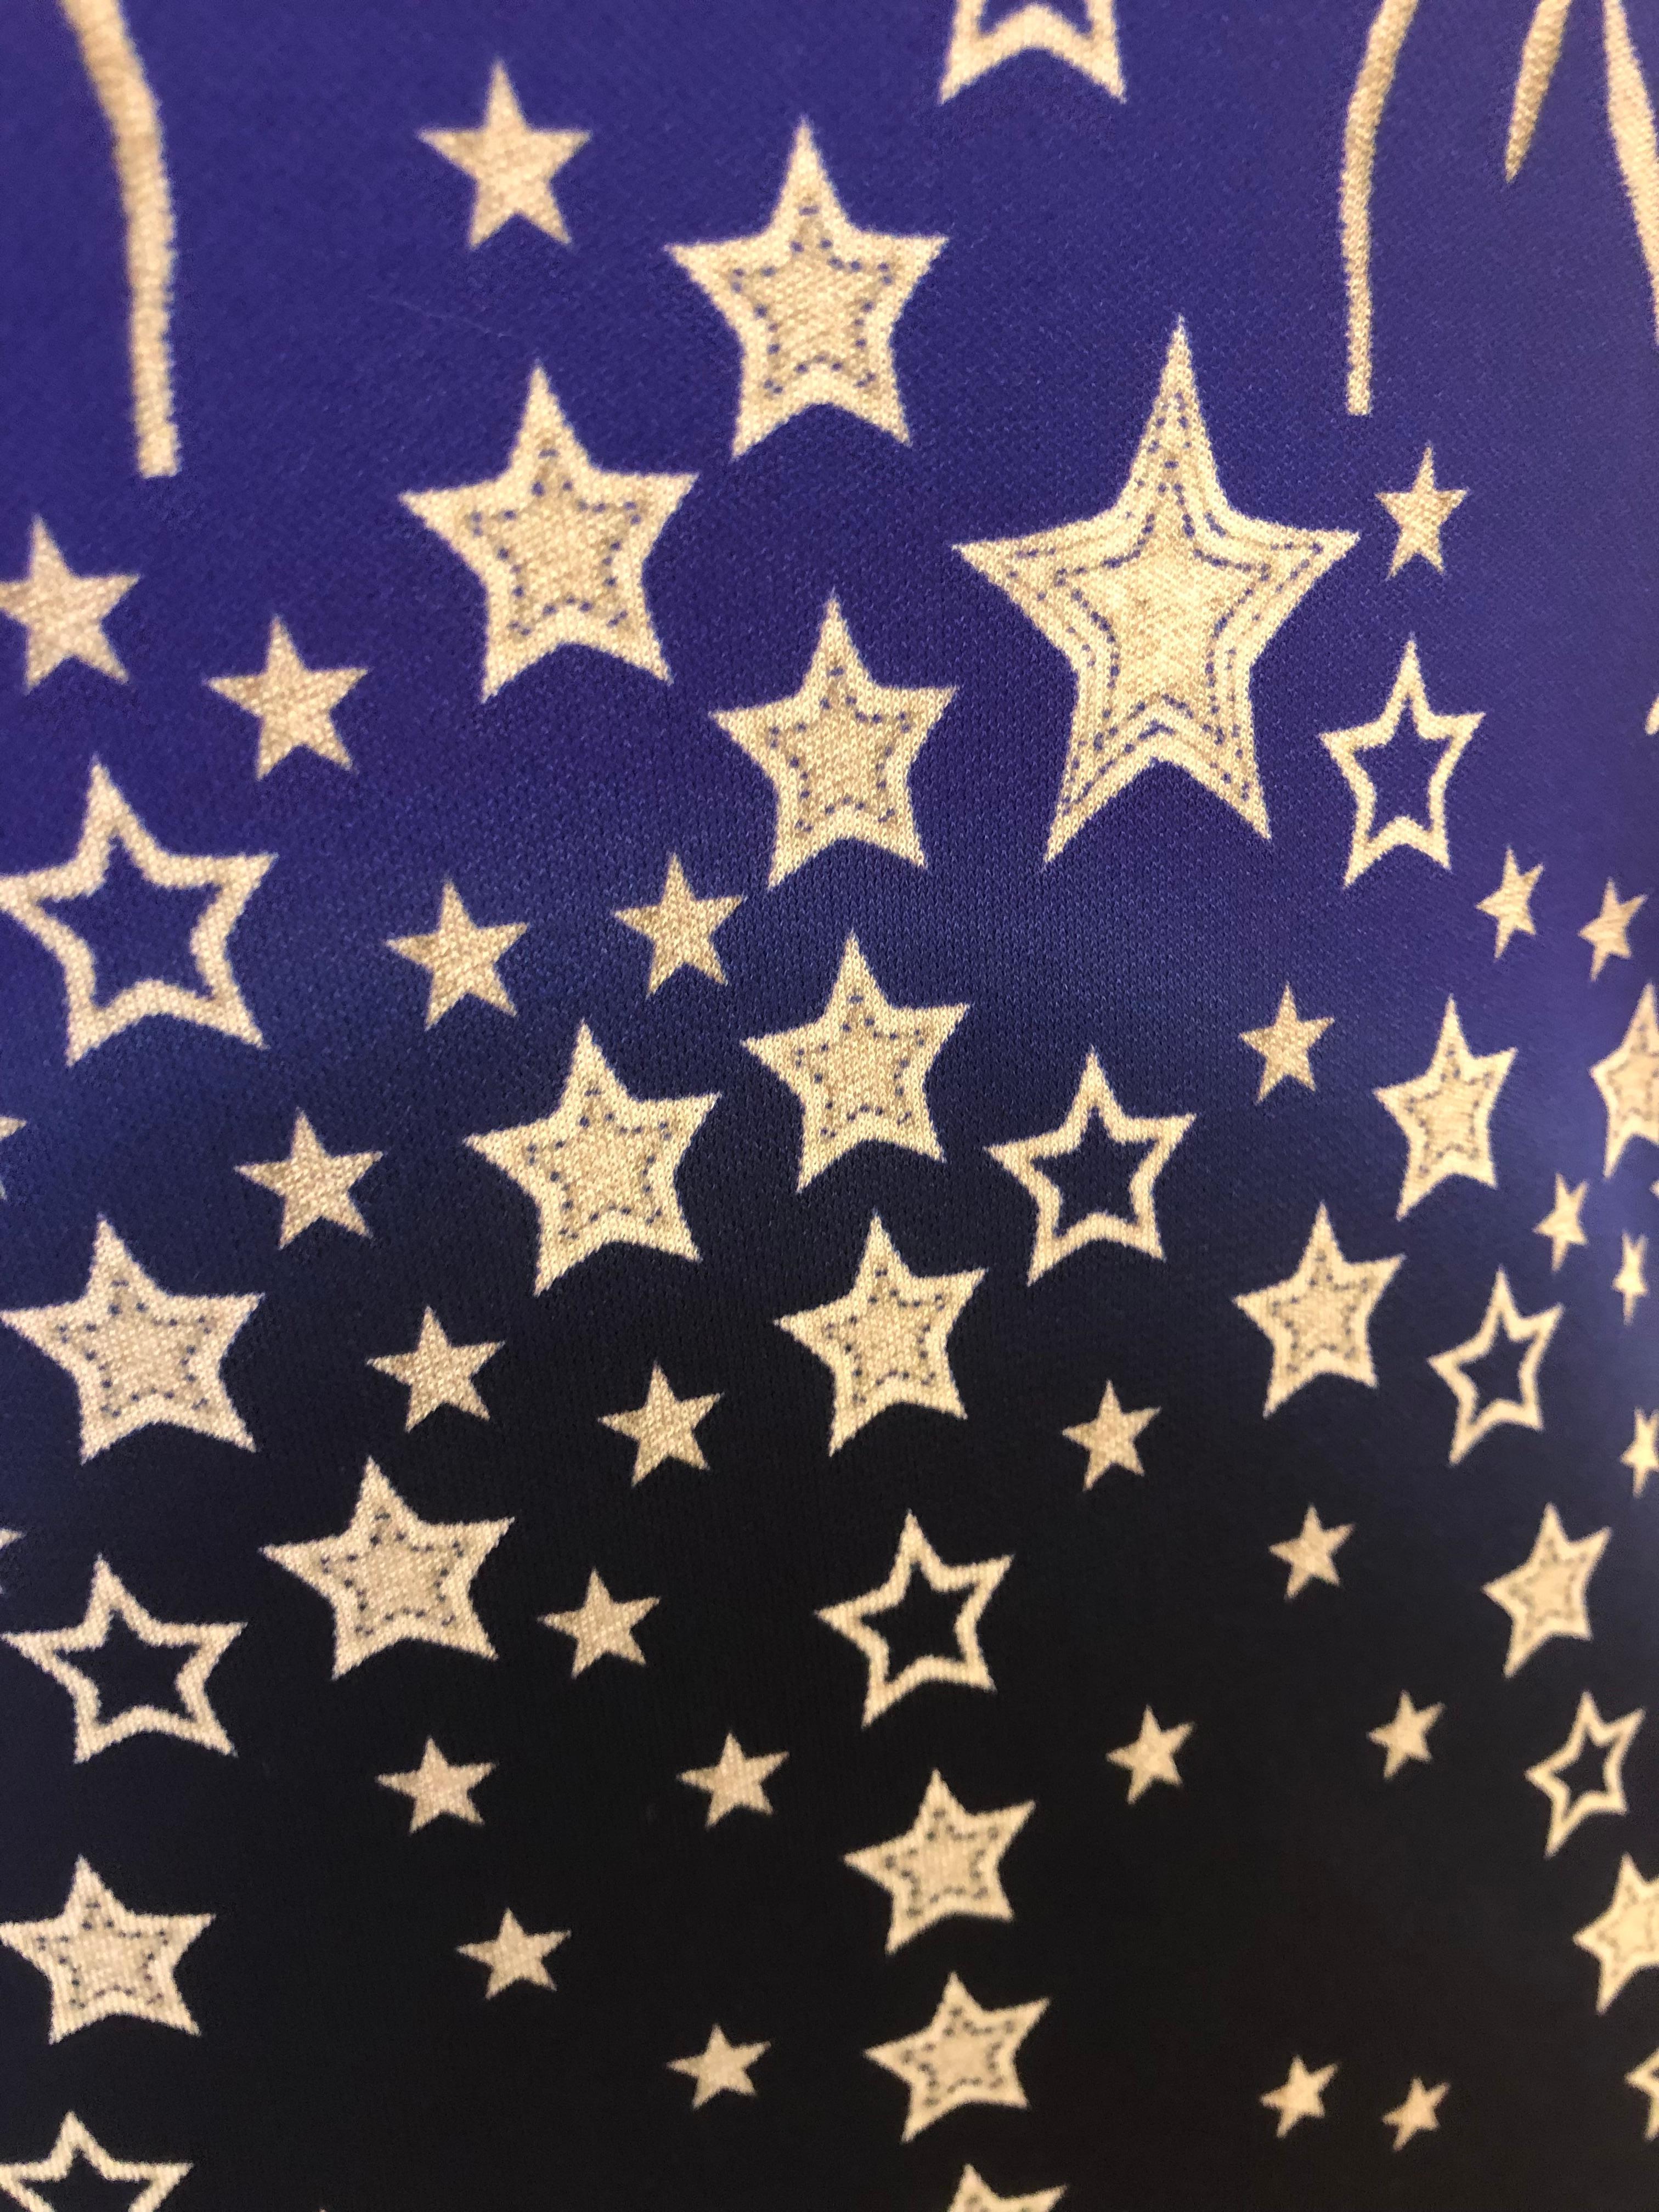 star printed dresses